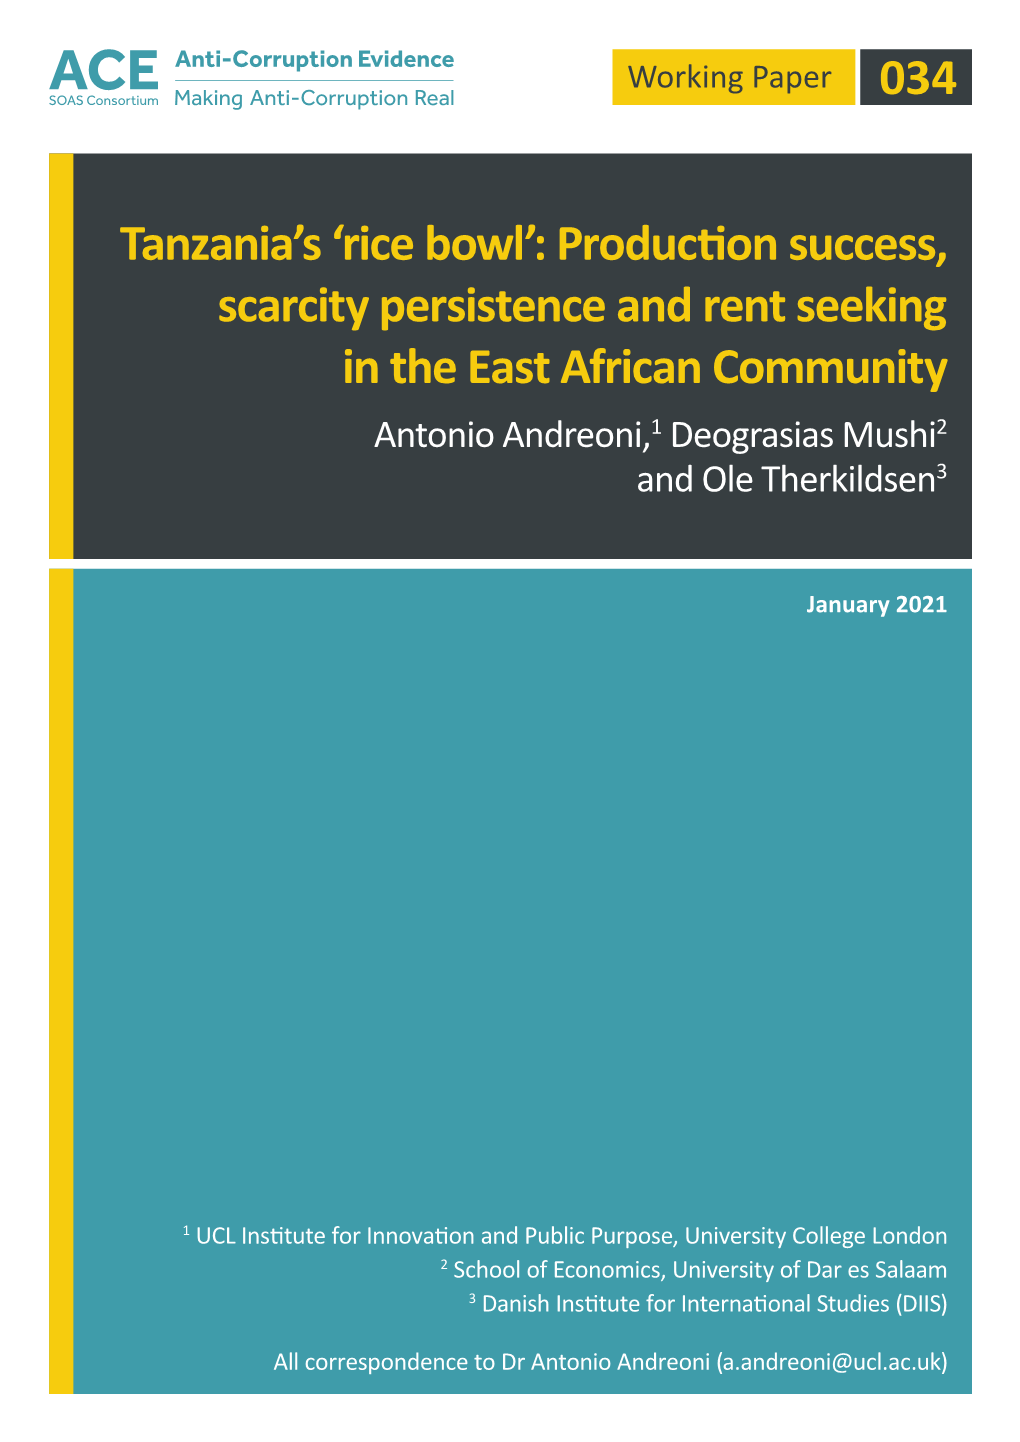 Tanzania's 'Rice Bowl'